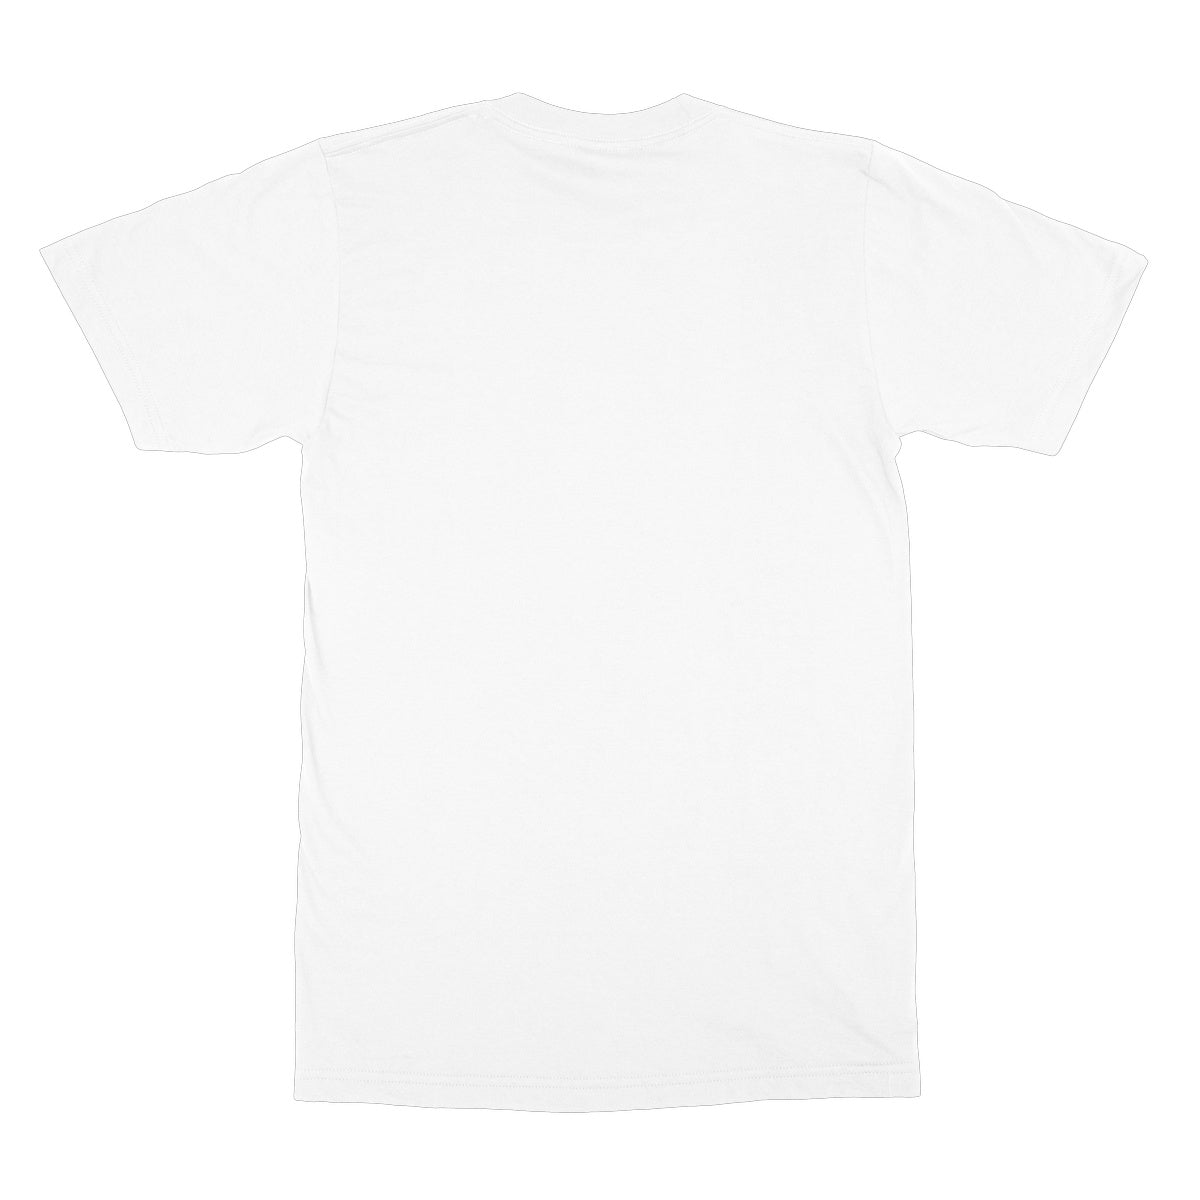 MIB Illustrated Tee Softstyle T-Shirt